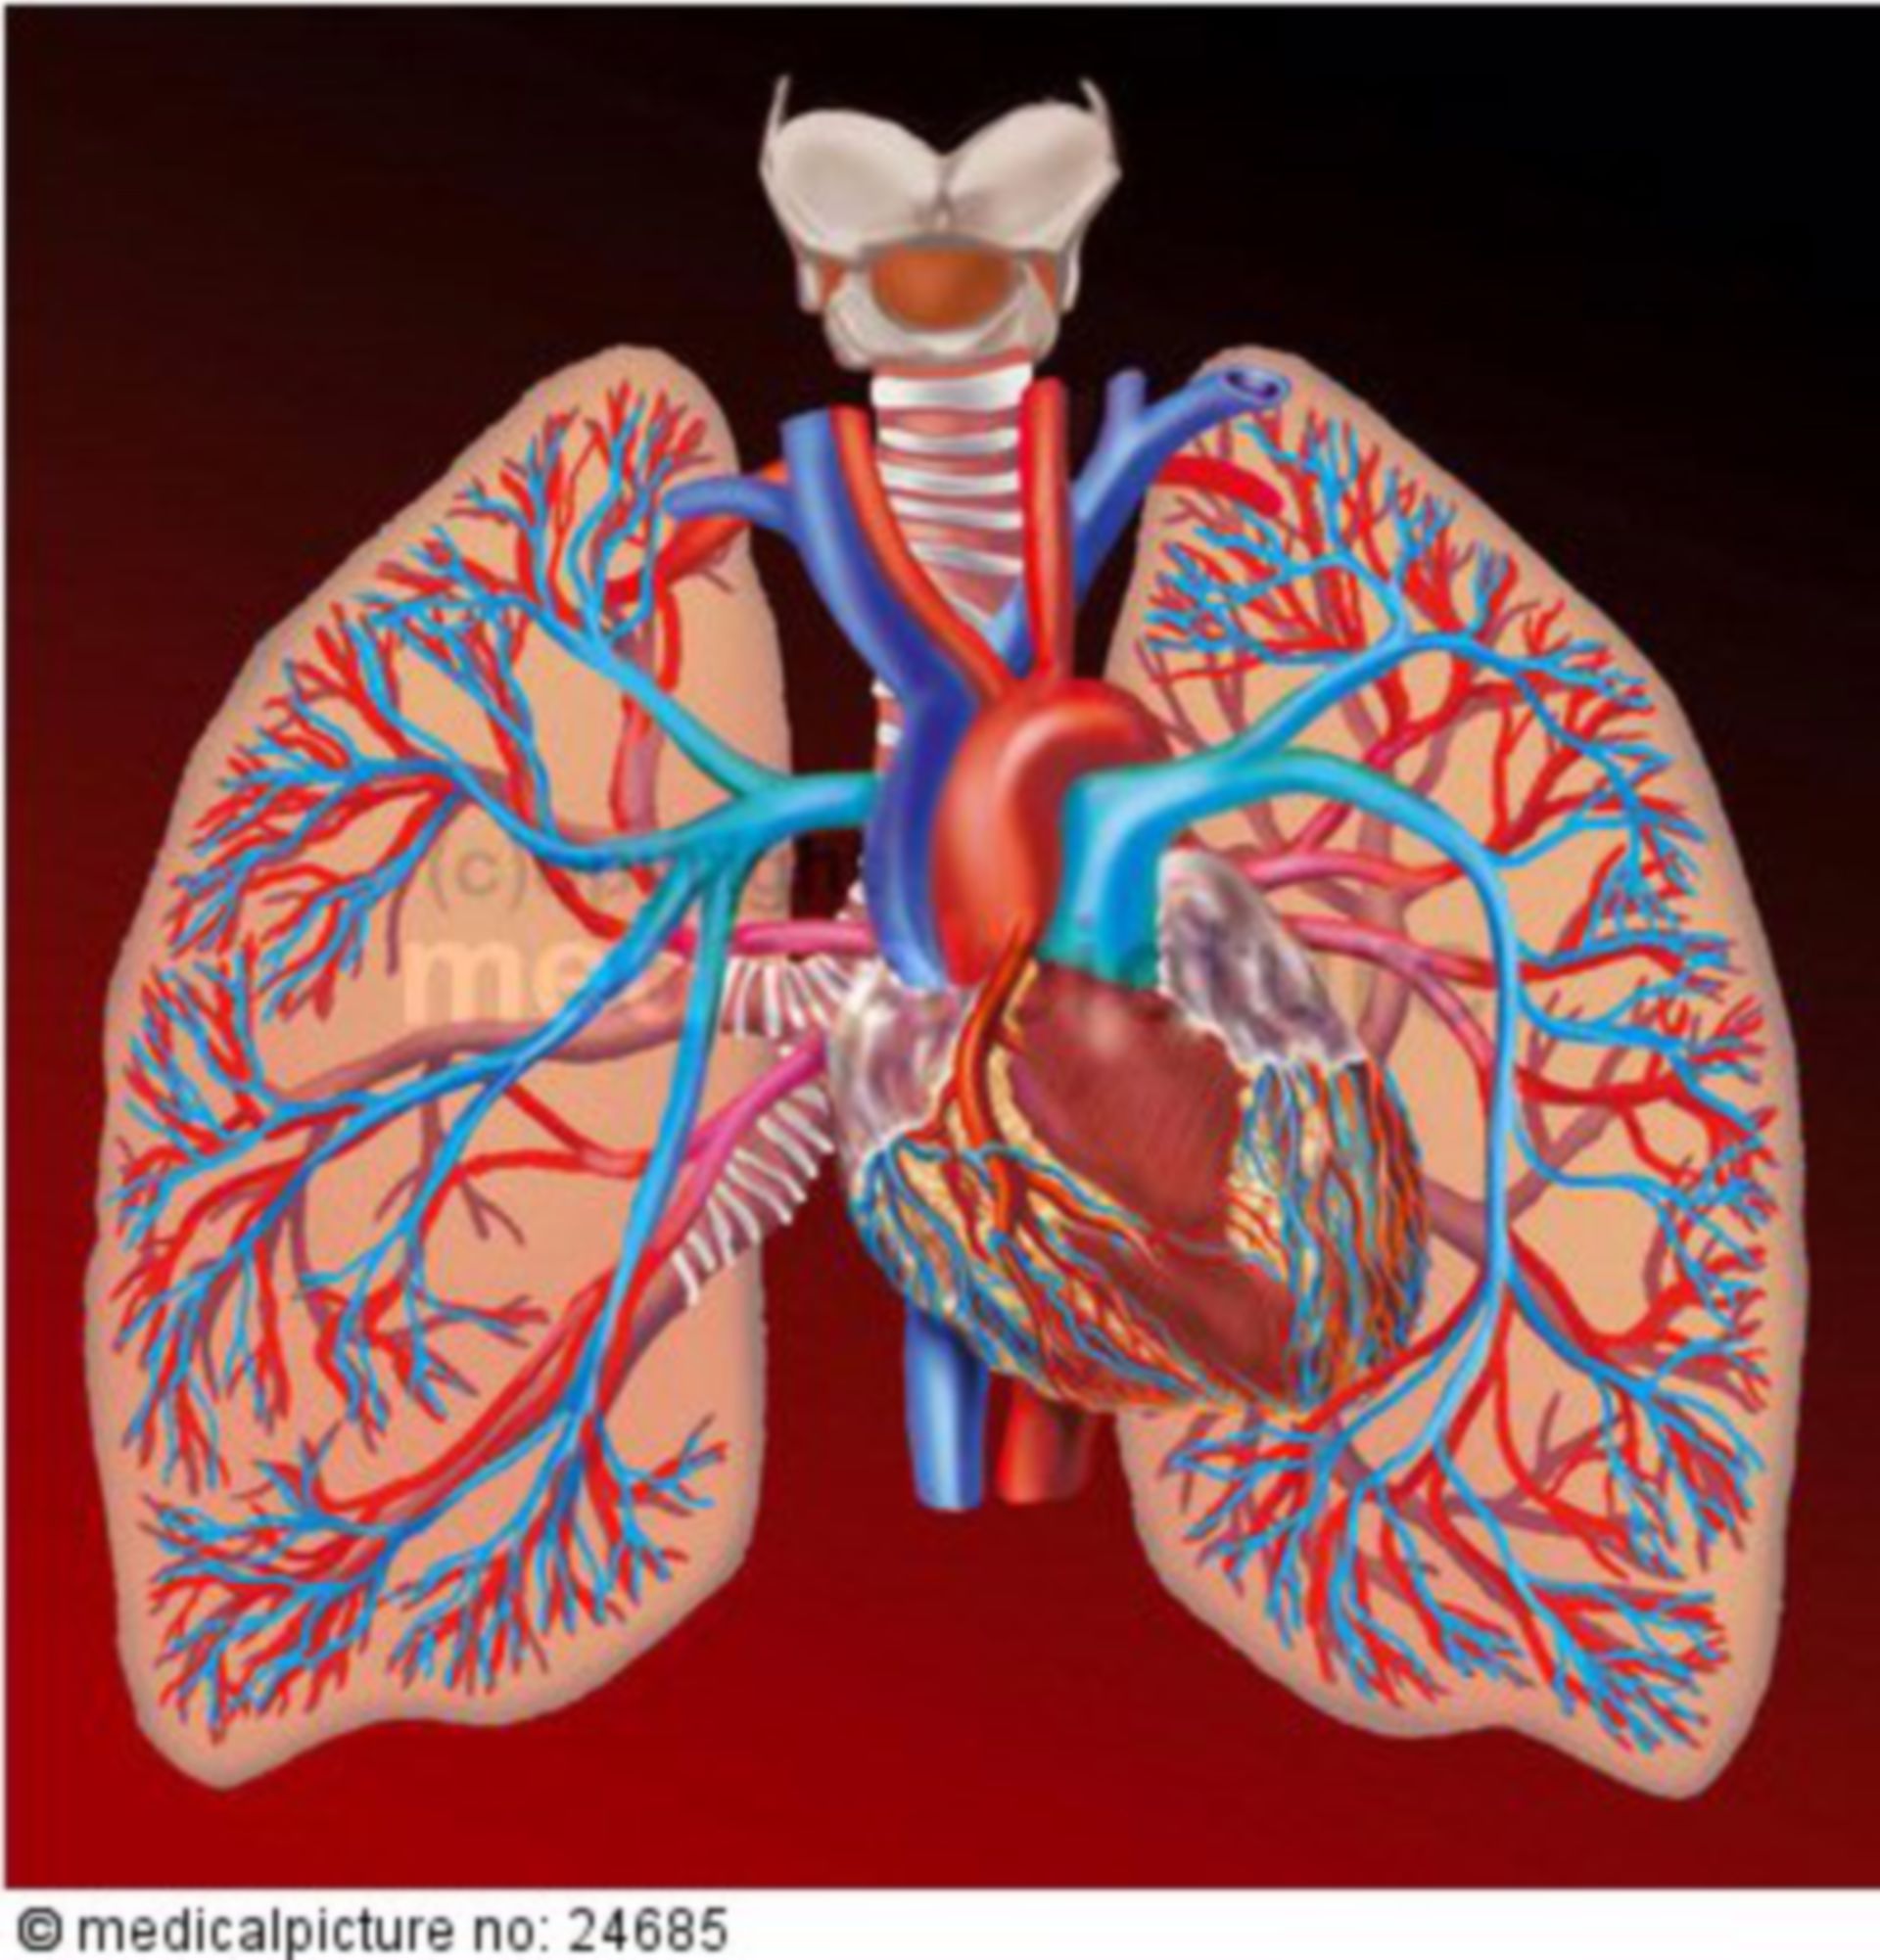 pulmonary circulation heart